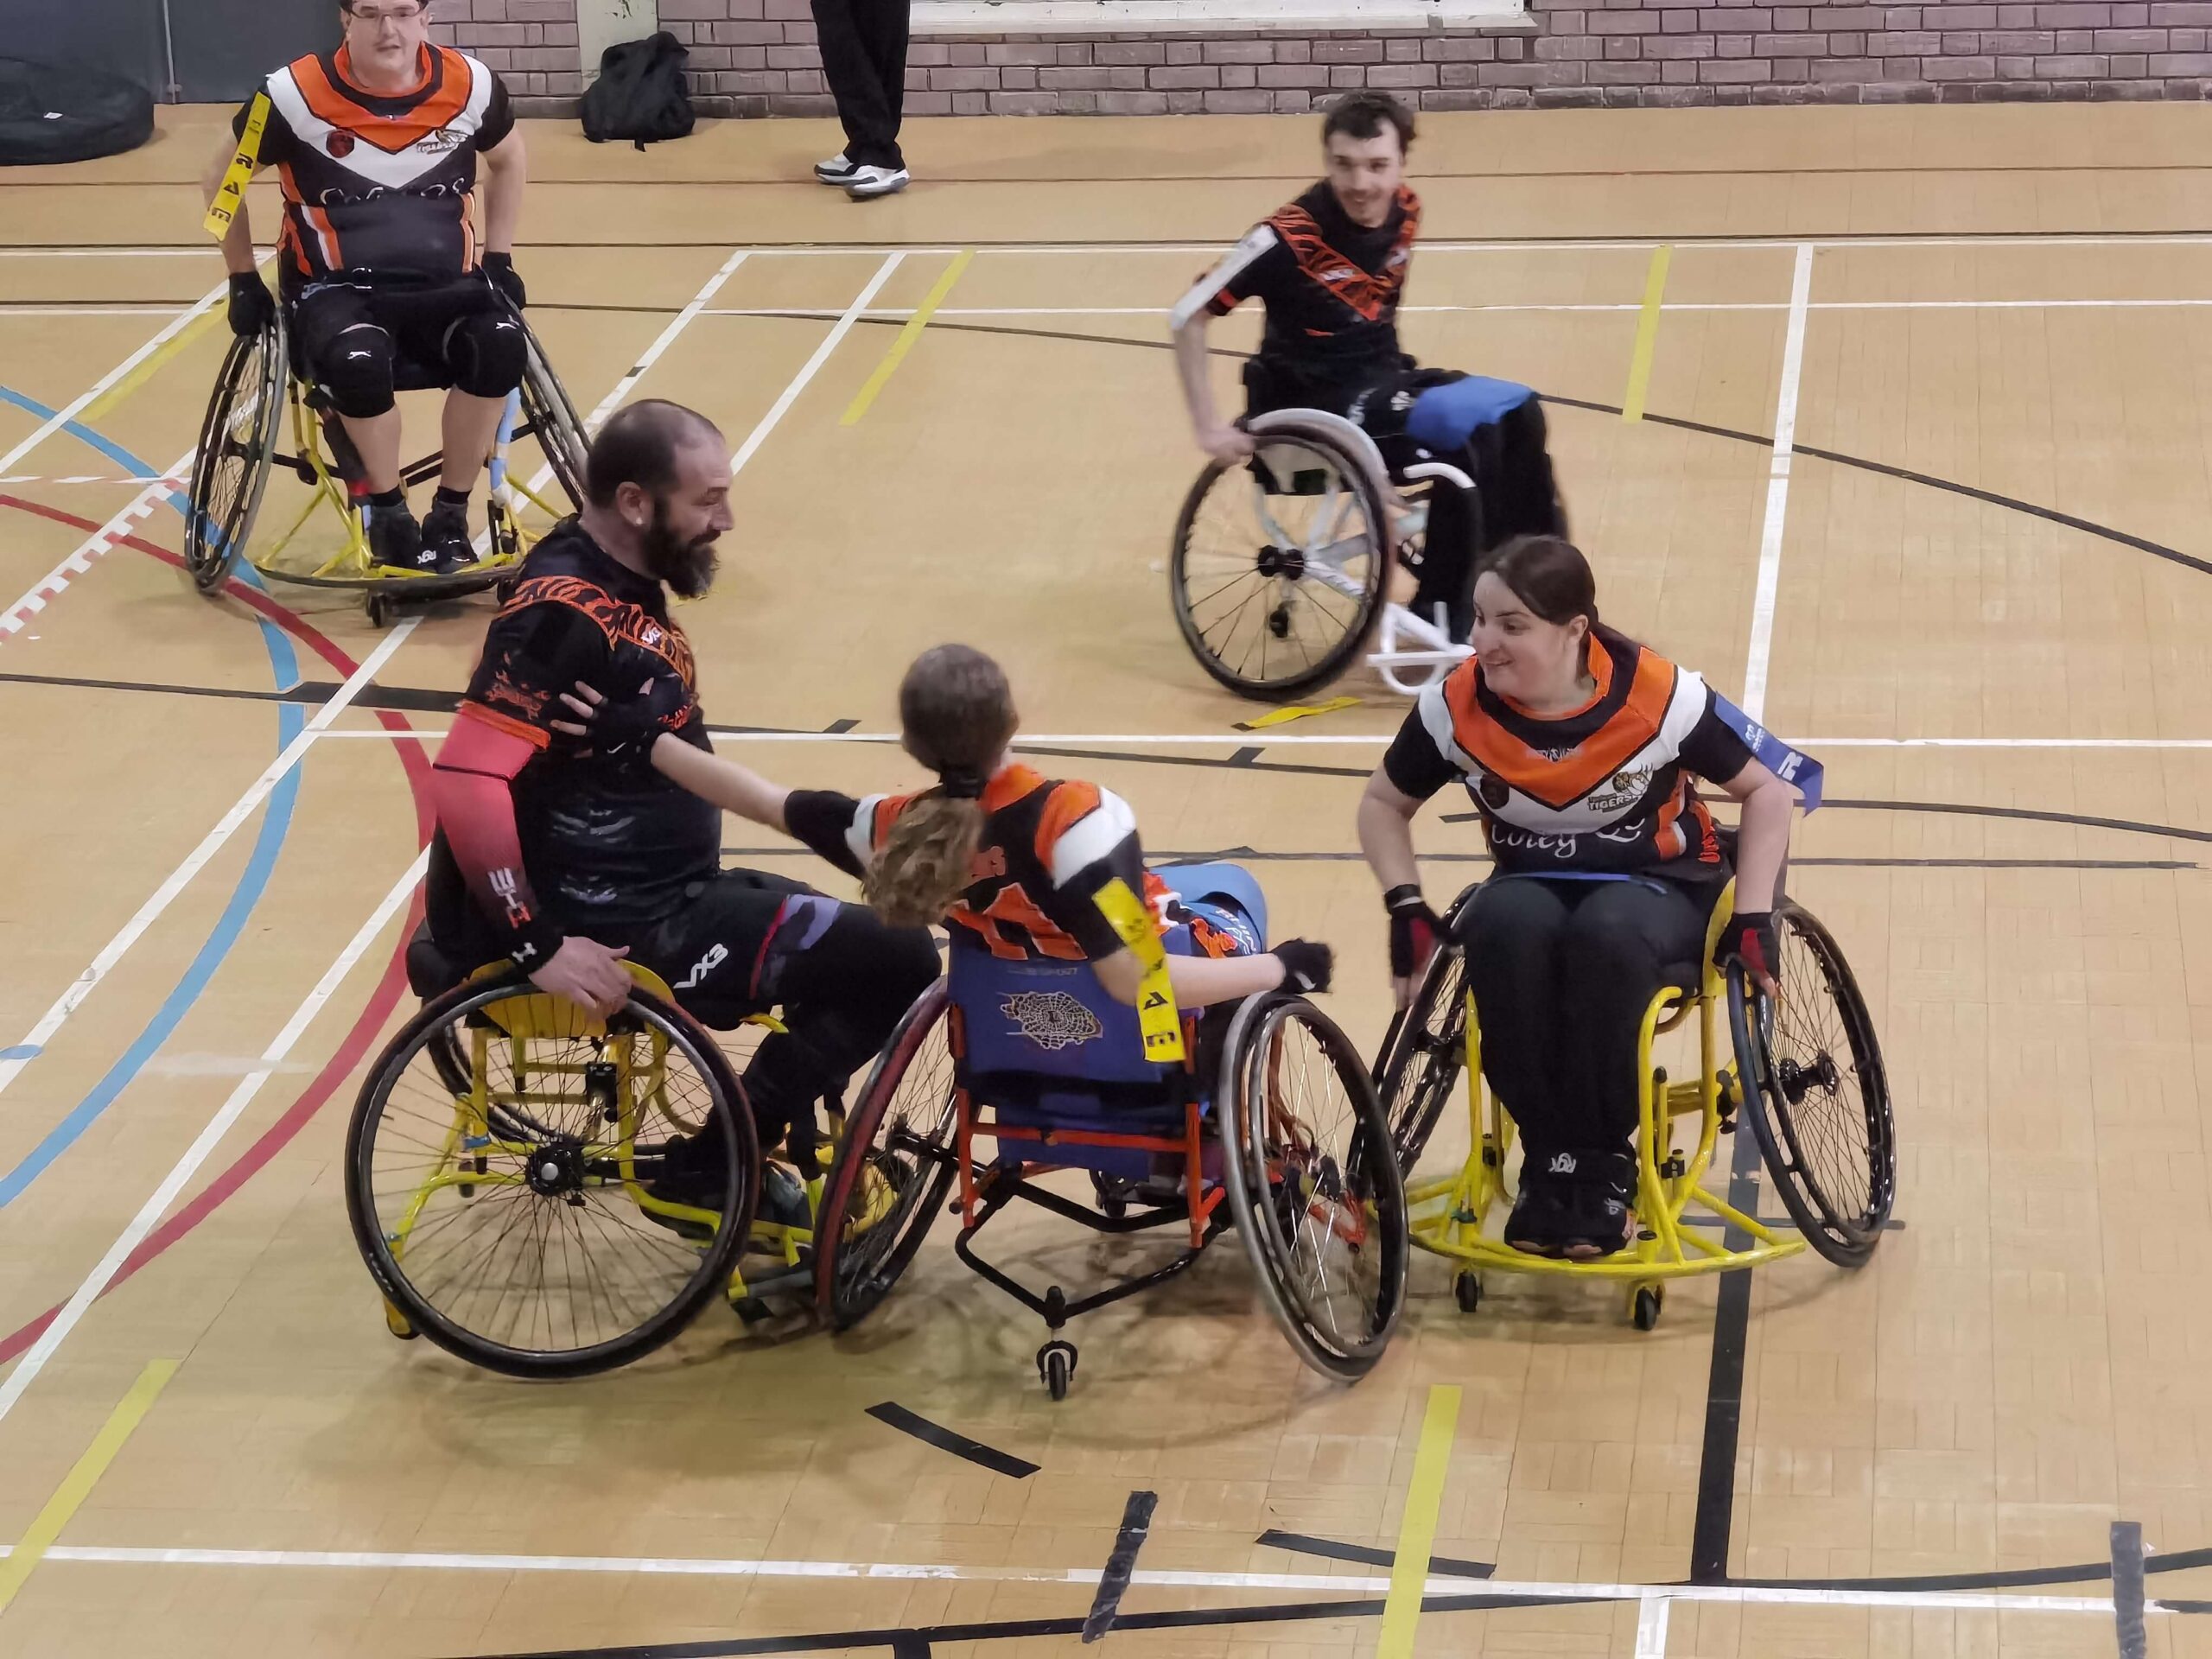 a wheelchair rugby match